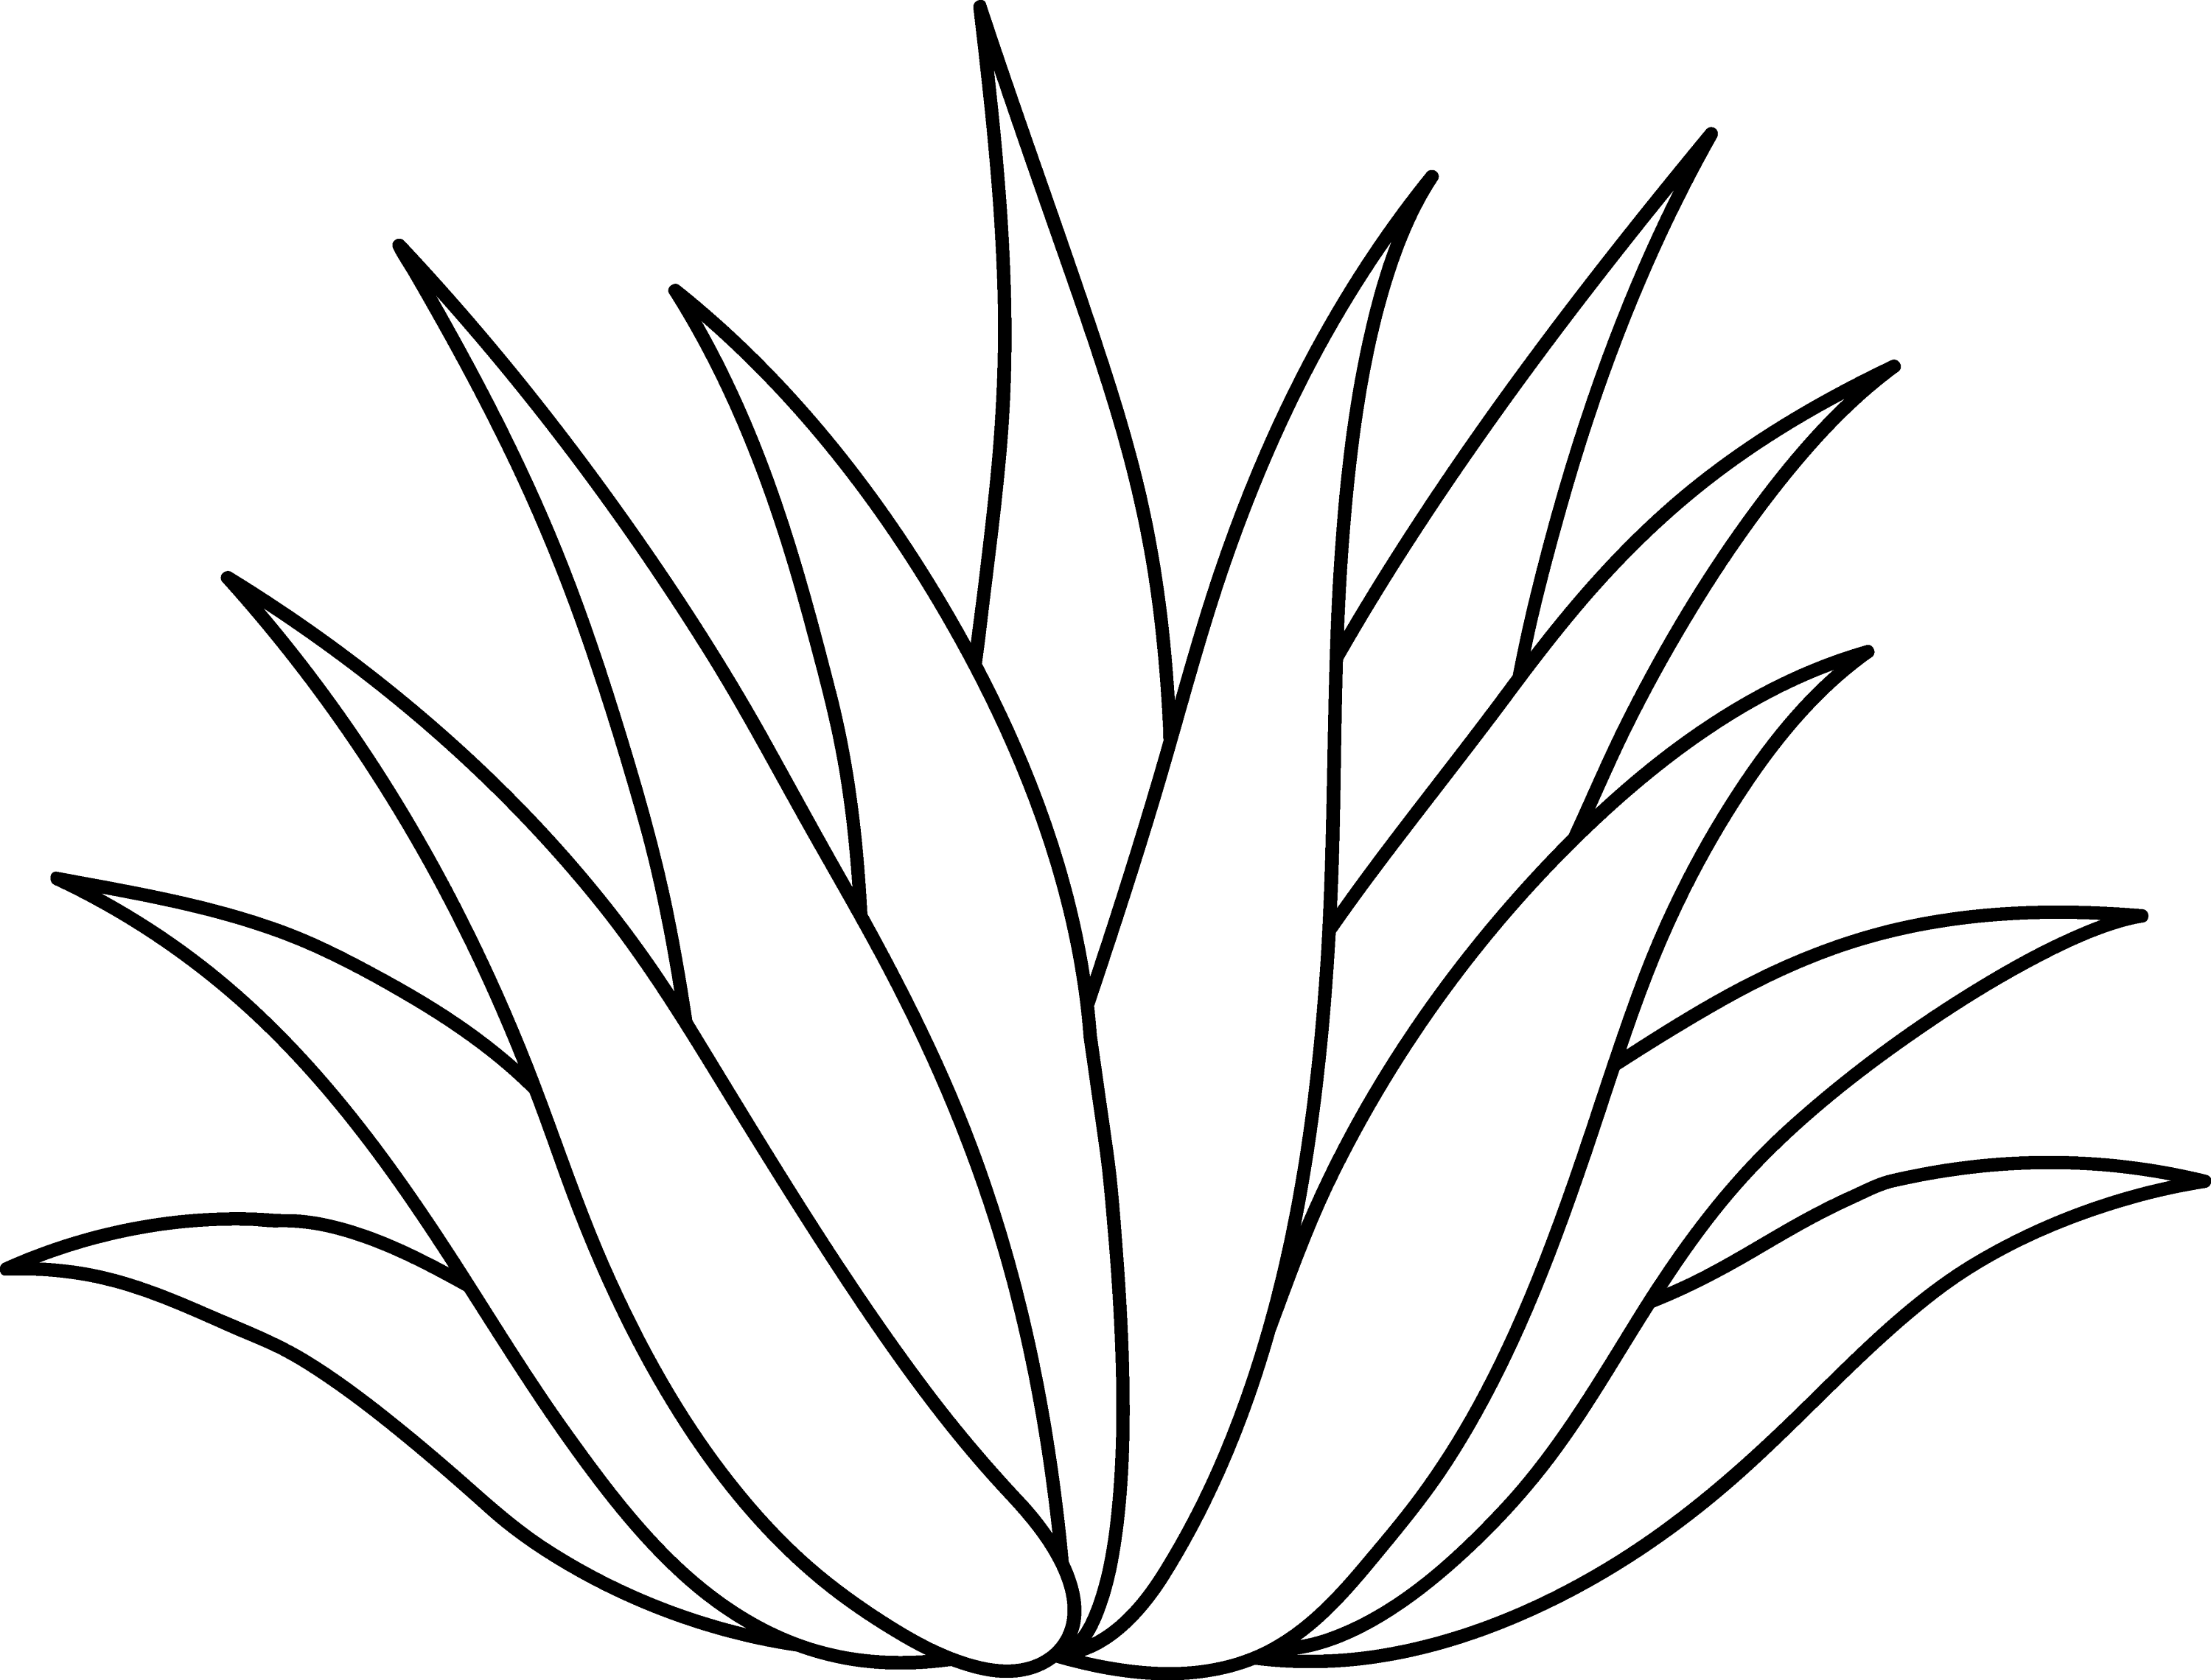 Agave or Aloe Plant Line Art - Free Clip Art